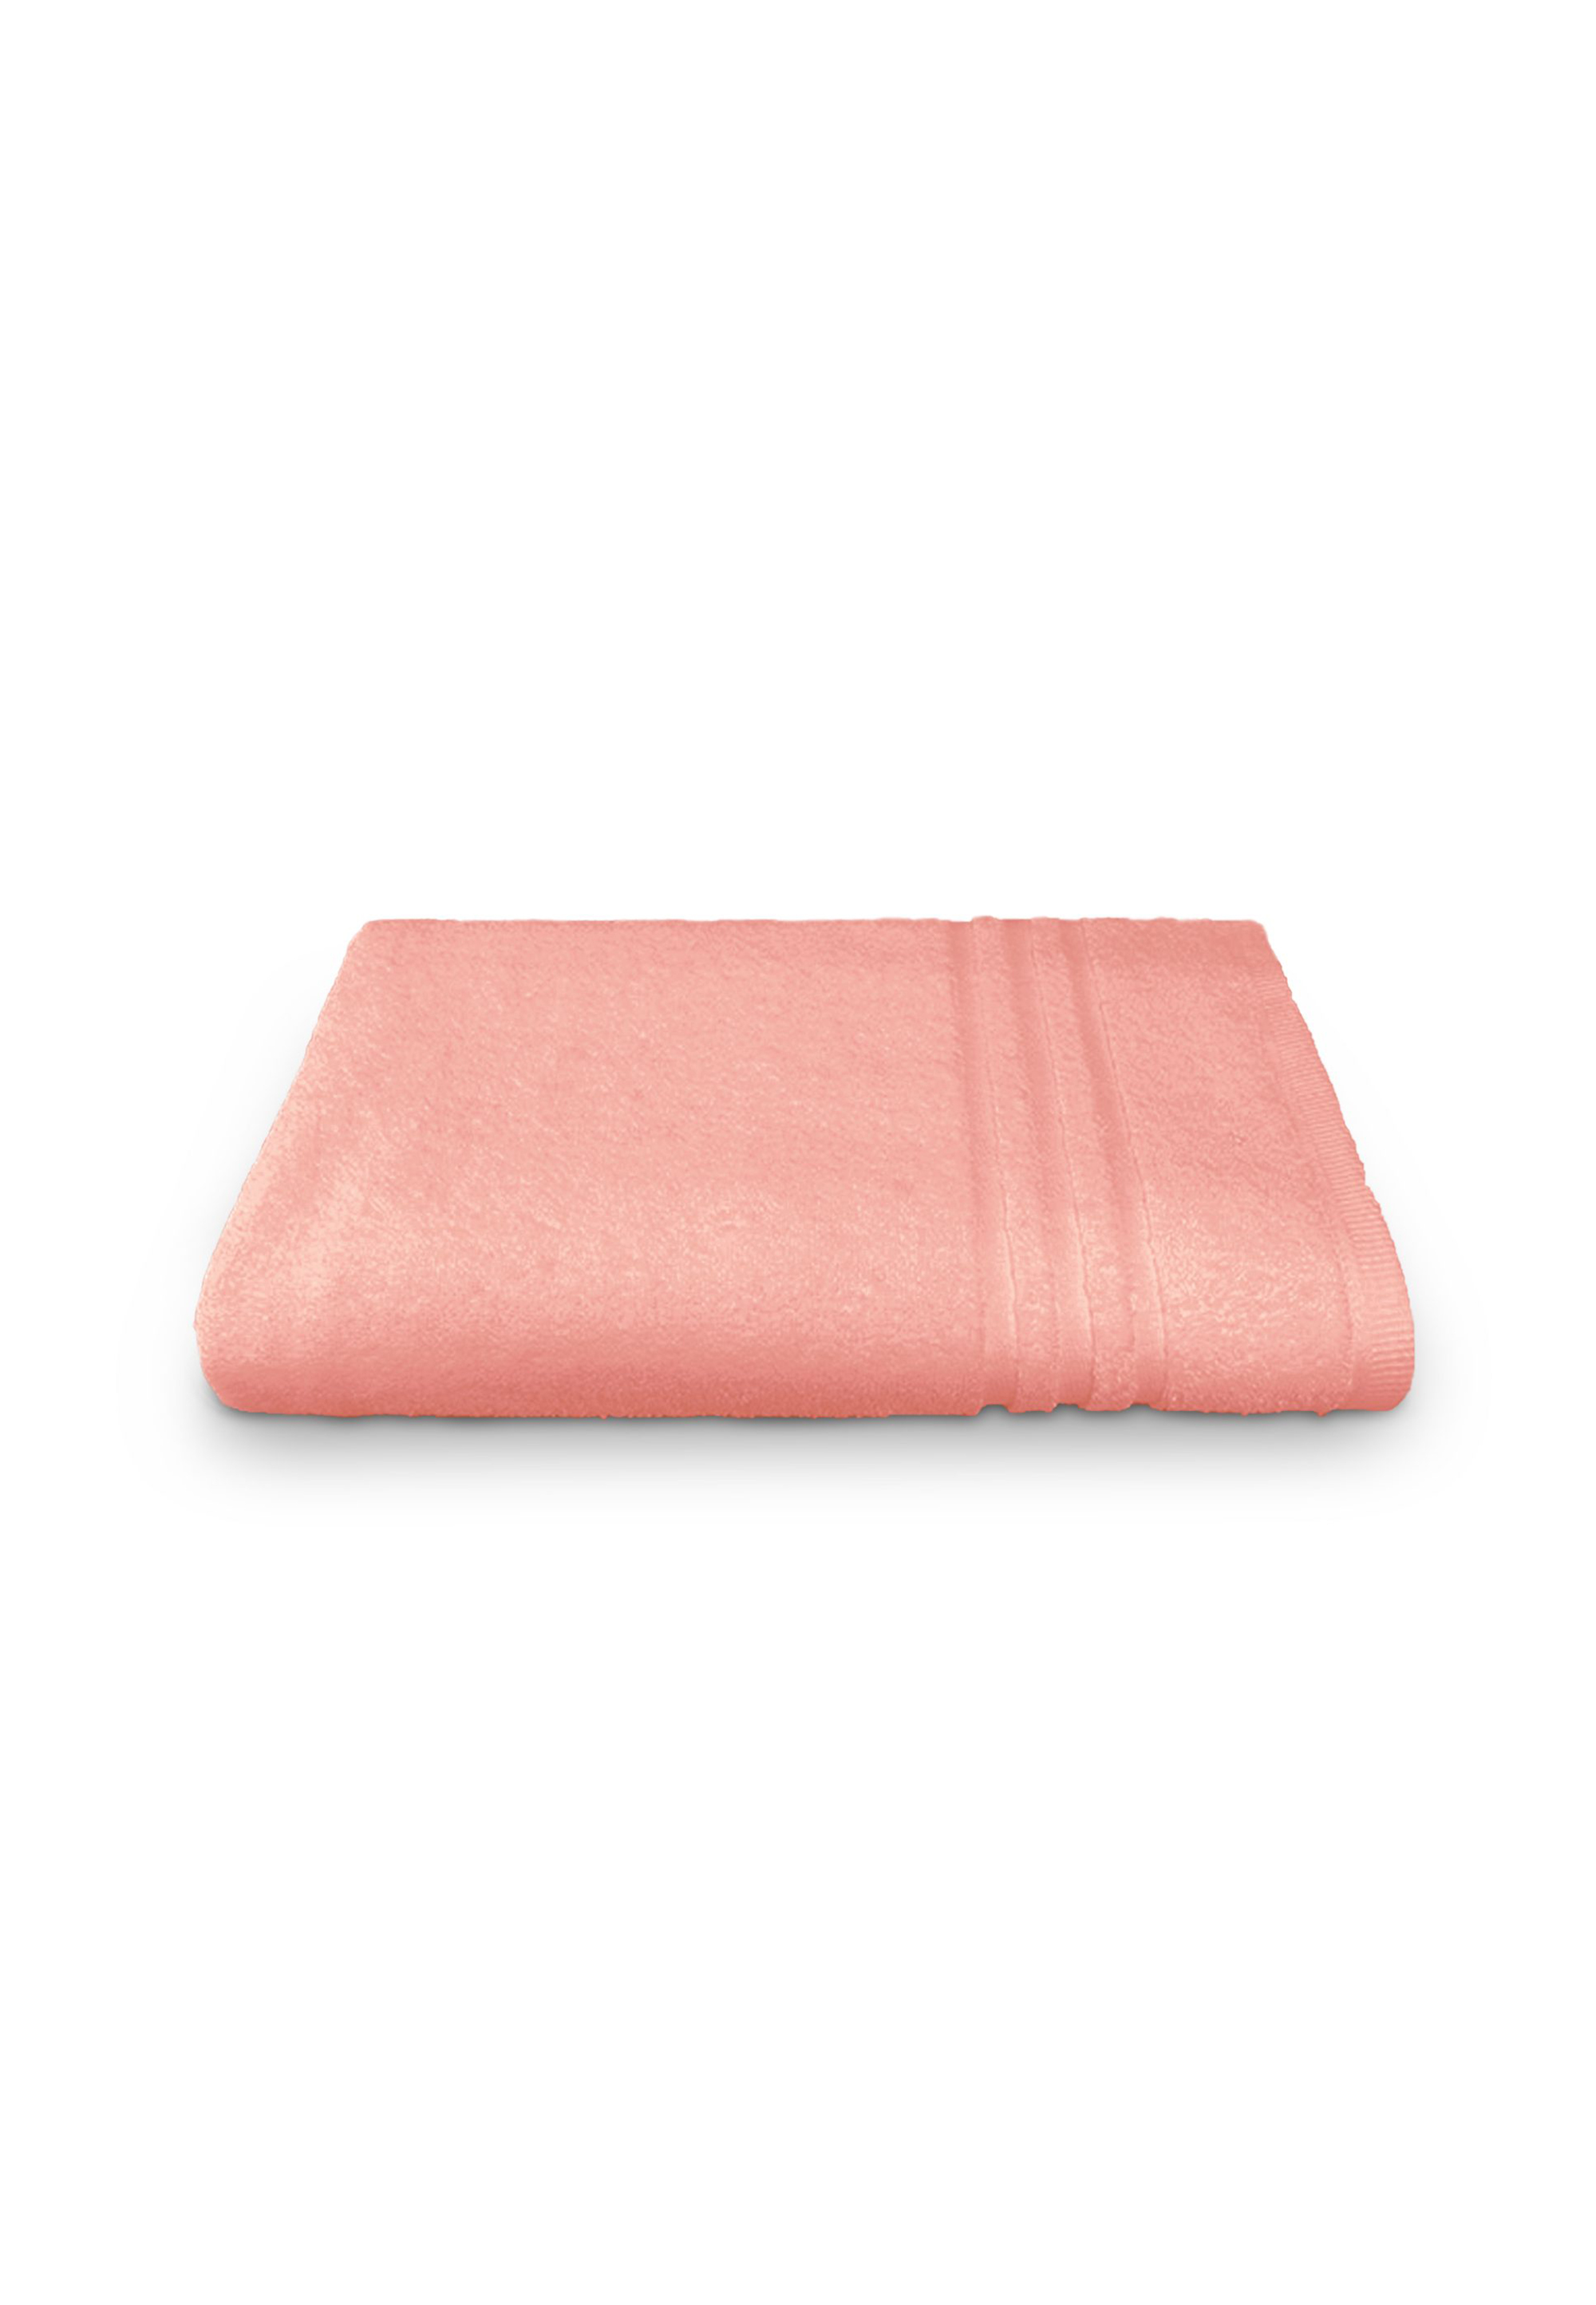 Полотенце для ванной Grace Grand Spa Duschtuch Aktion, розовый полотенце для ванной grace grand spa aktion цвет apricot